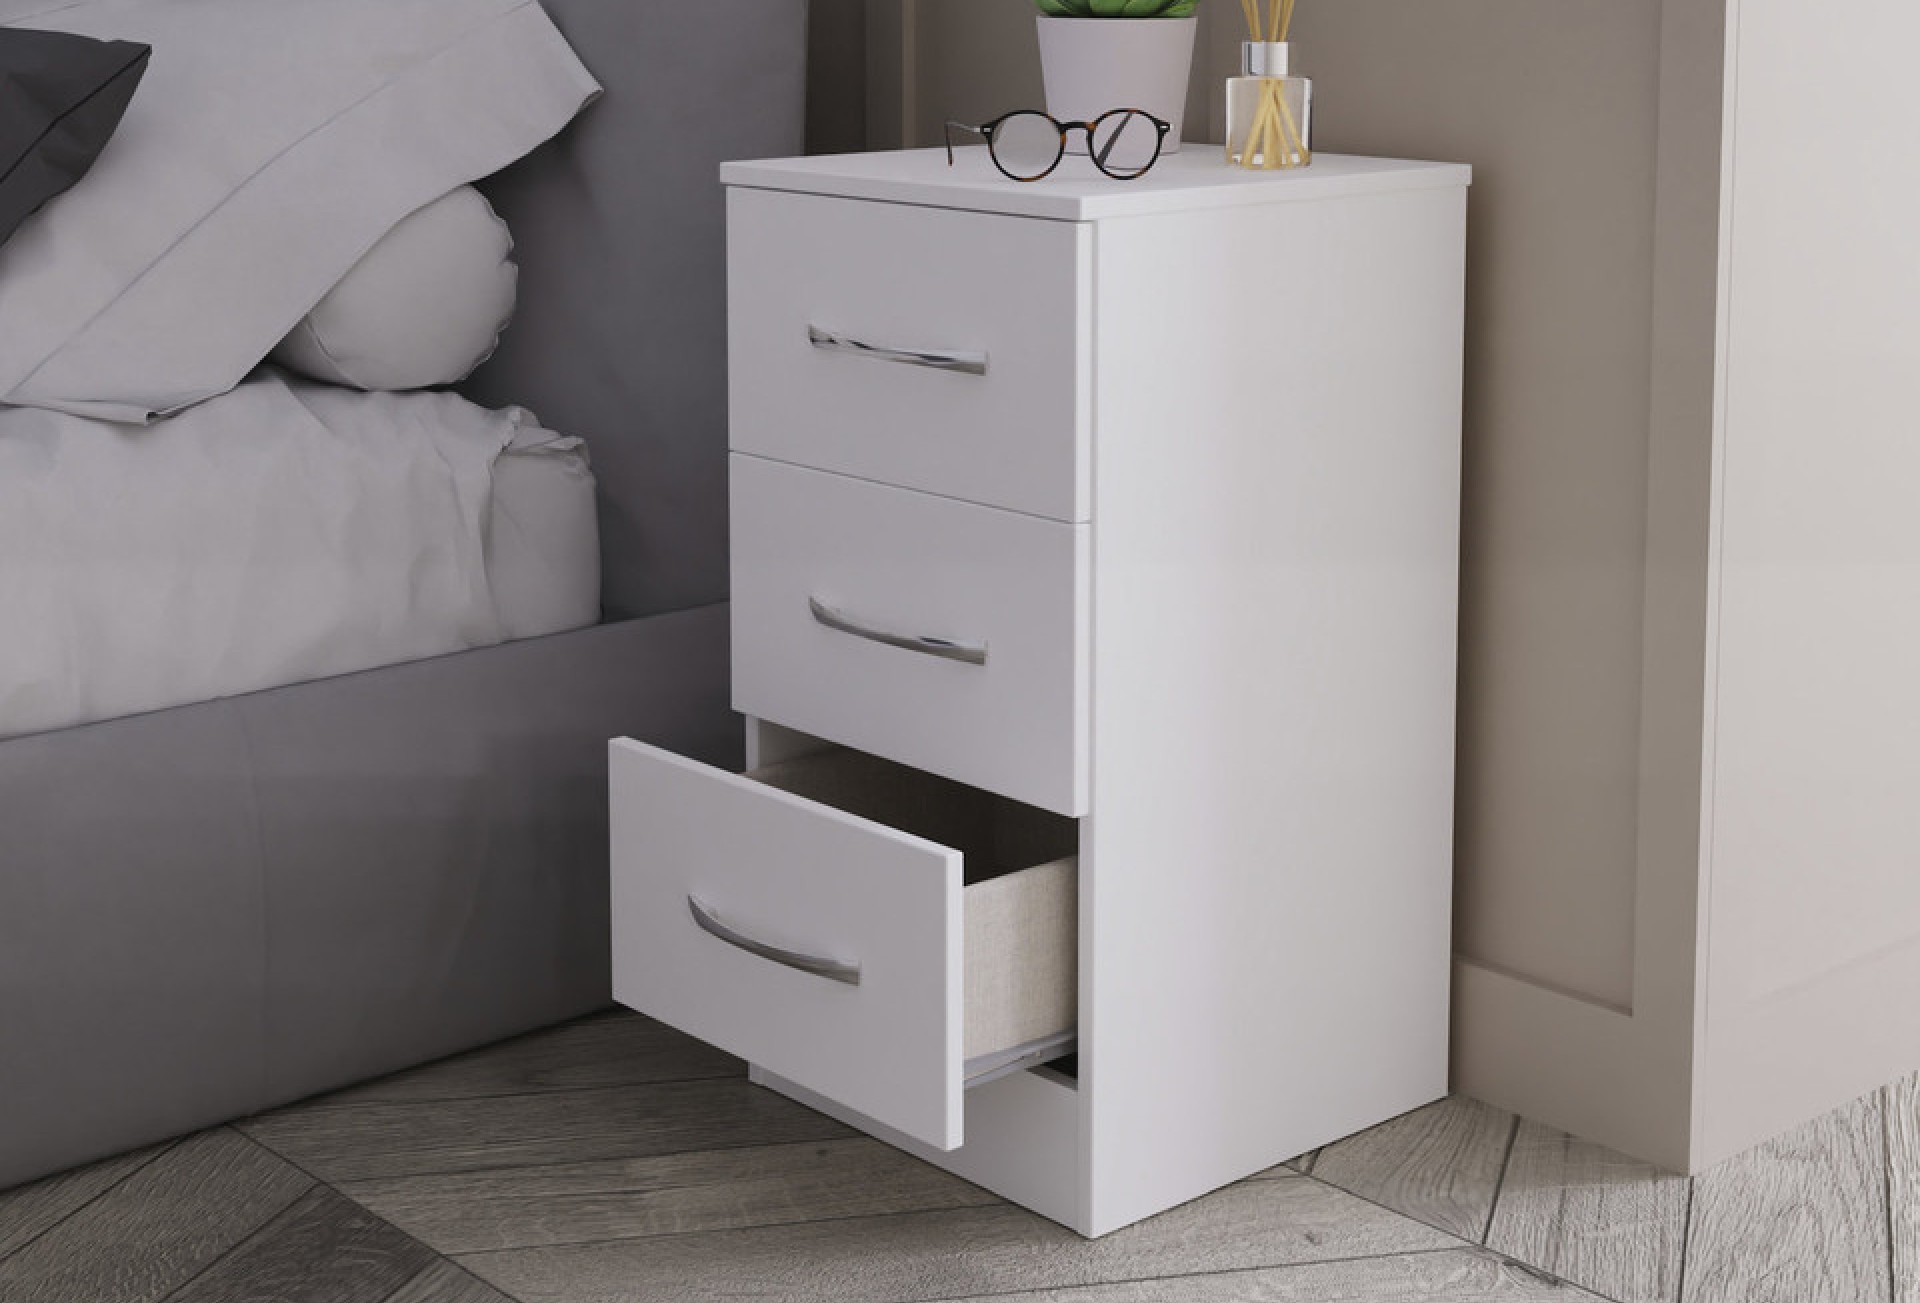 Ferrara white 3-drawer bedside table in situ